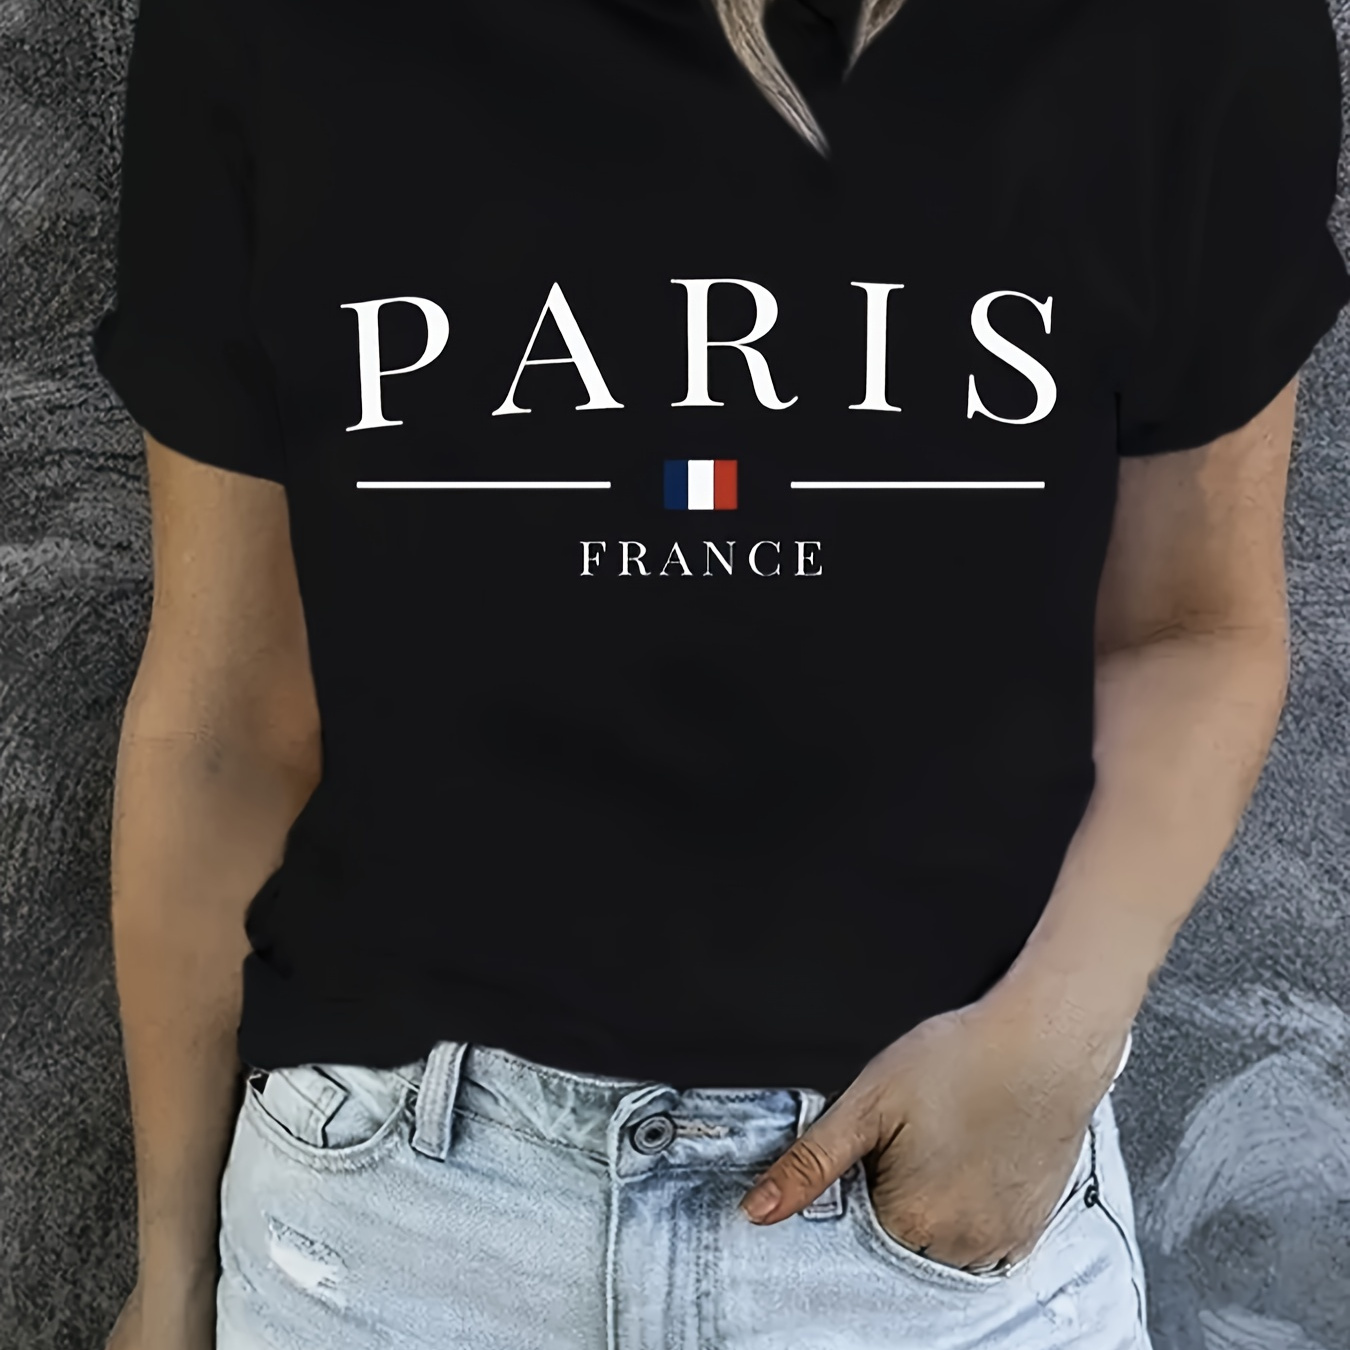 

Paris Print Crew Neck T-shirt, Casual Short Sleeve T-shirt For Spring & Summer, Women's Clothing